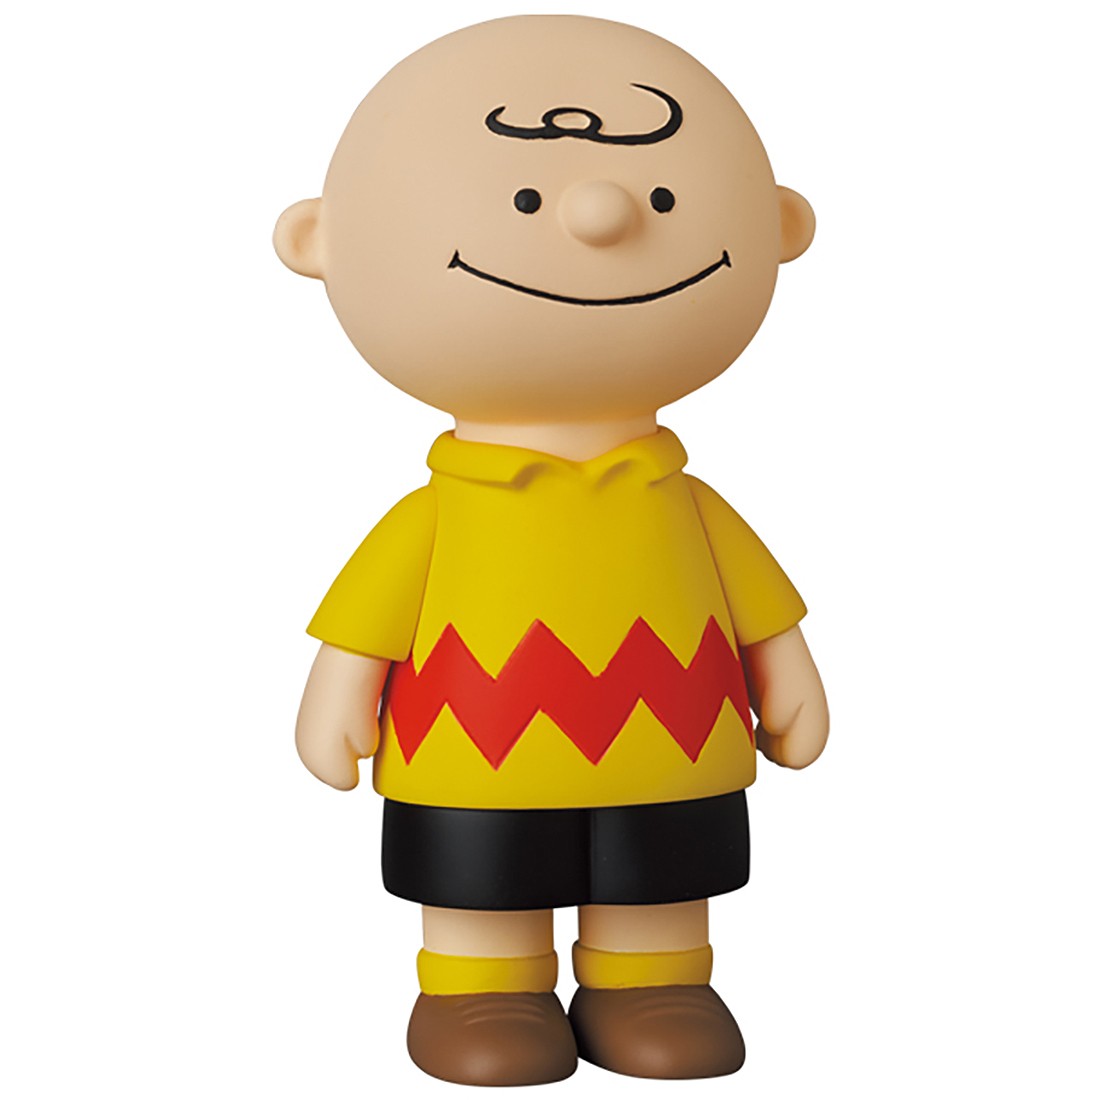 Medicom UDF Peanuts Series 12 50's Snoopy And Charlie Brown Figure yellow